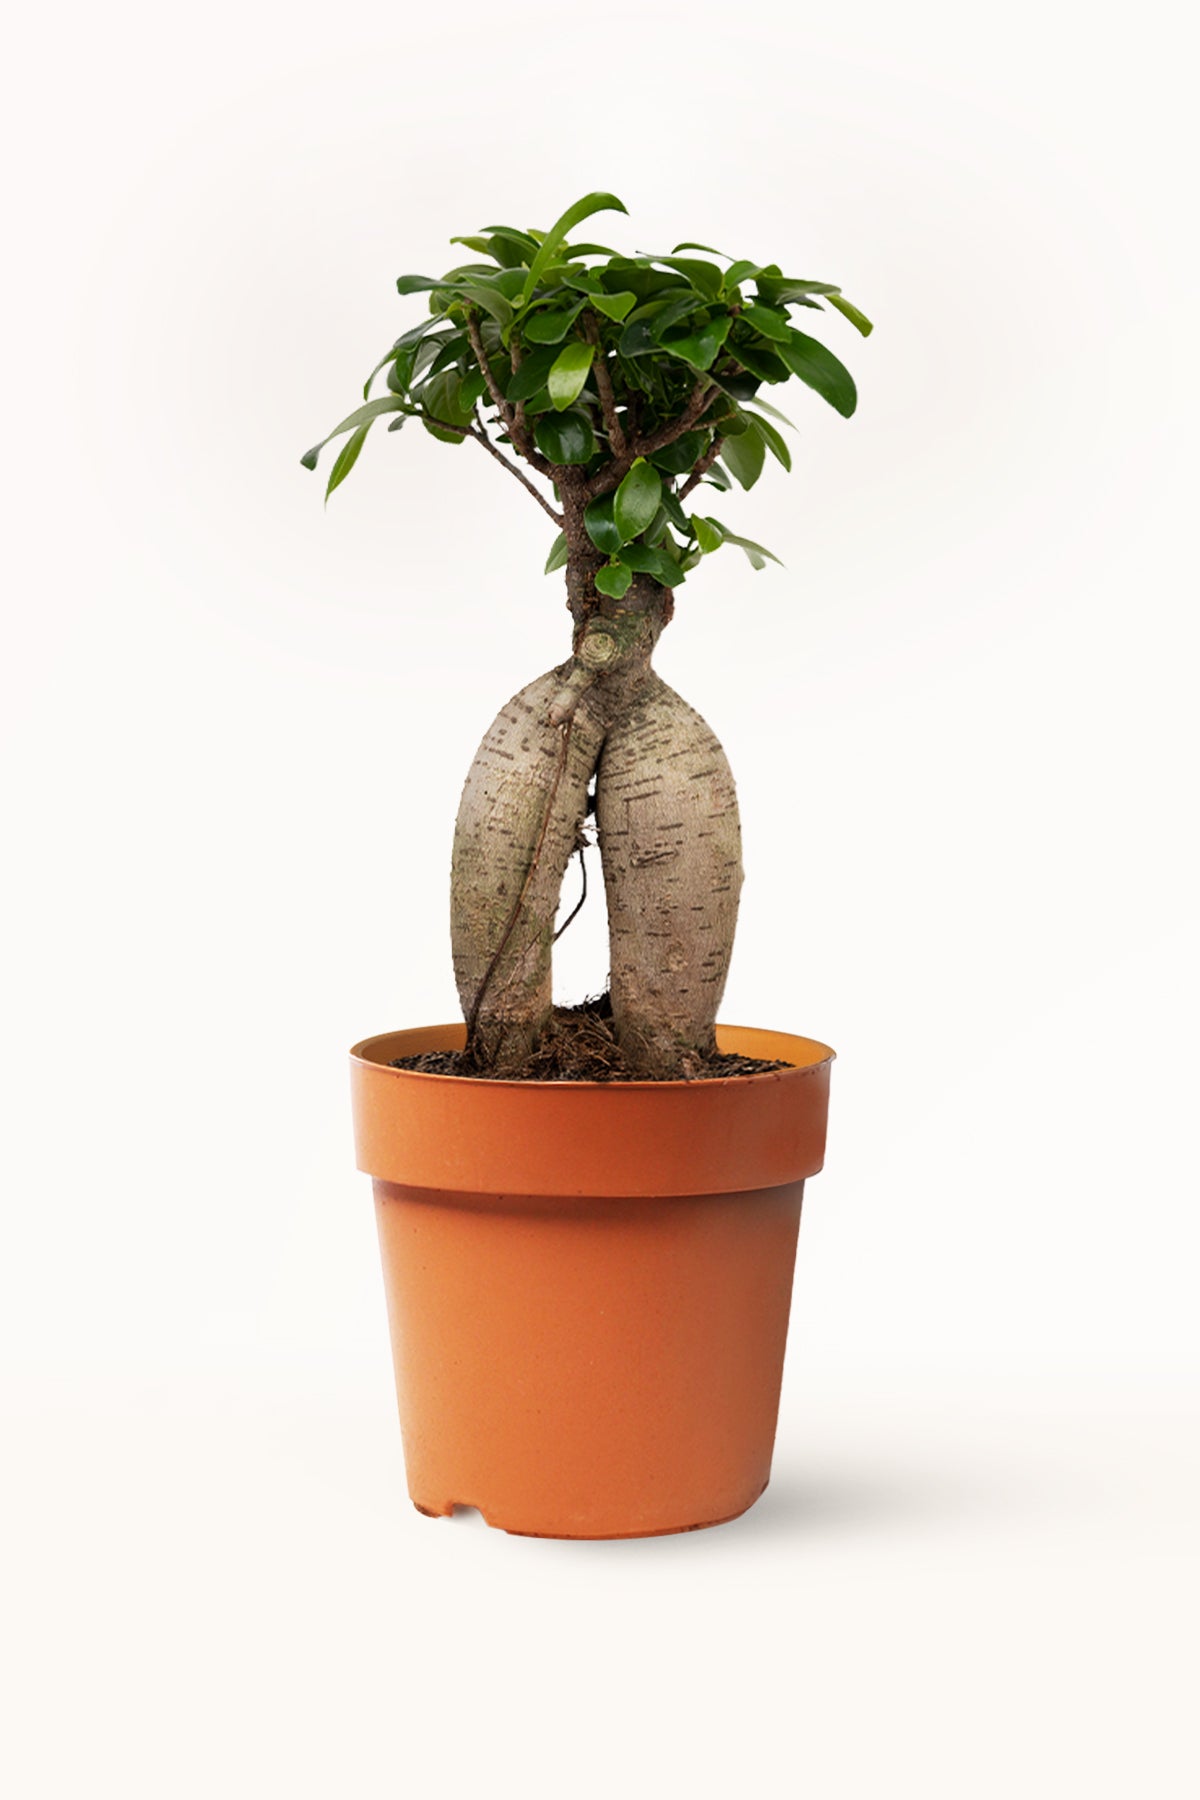 Comprar Ficus online April Plants |